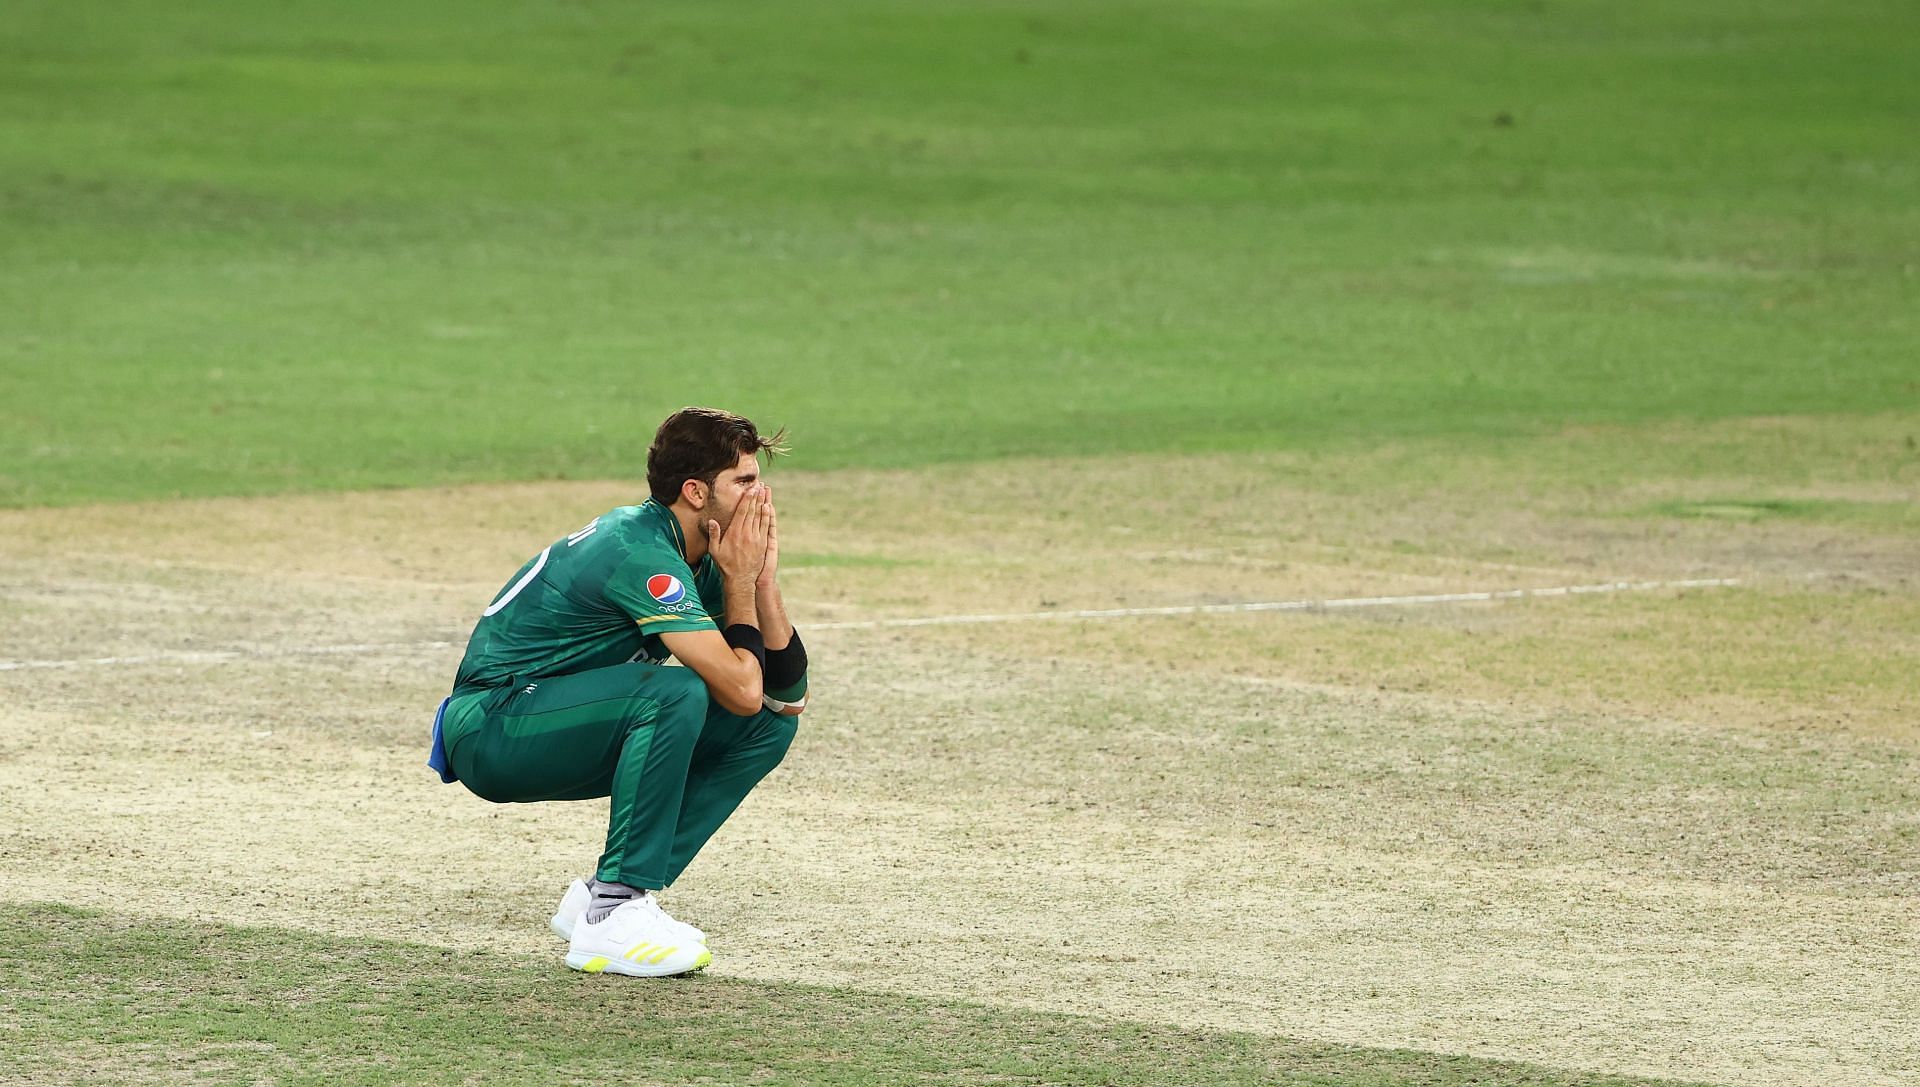 Pakistan v Australia - ICC Men